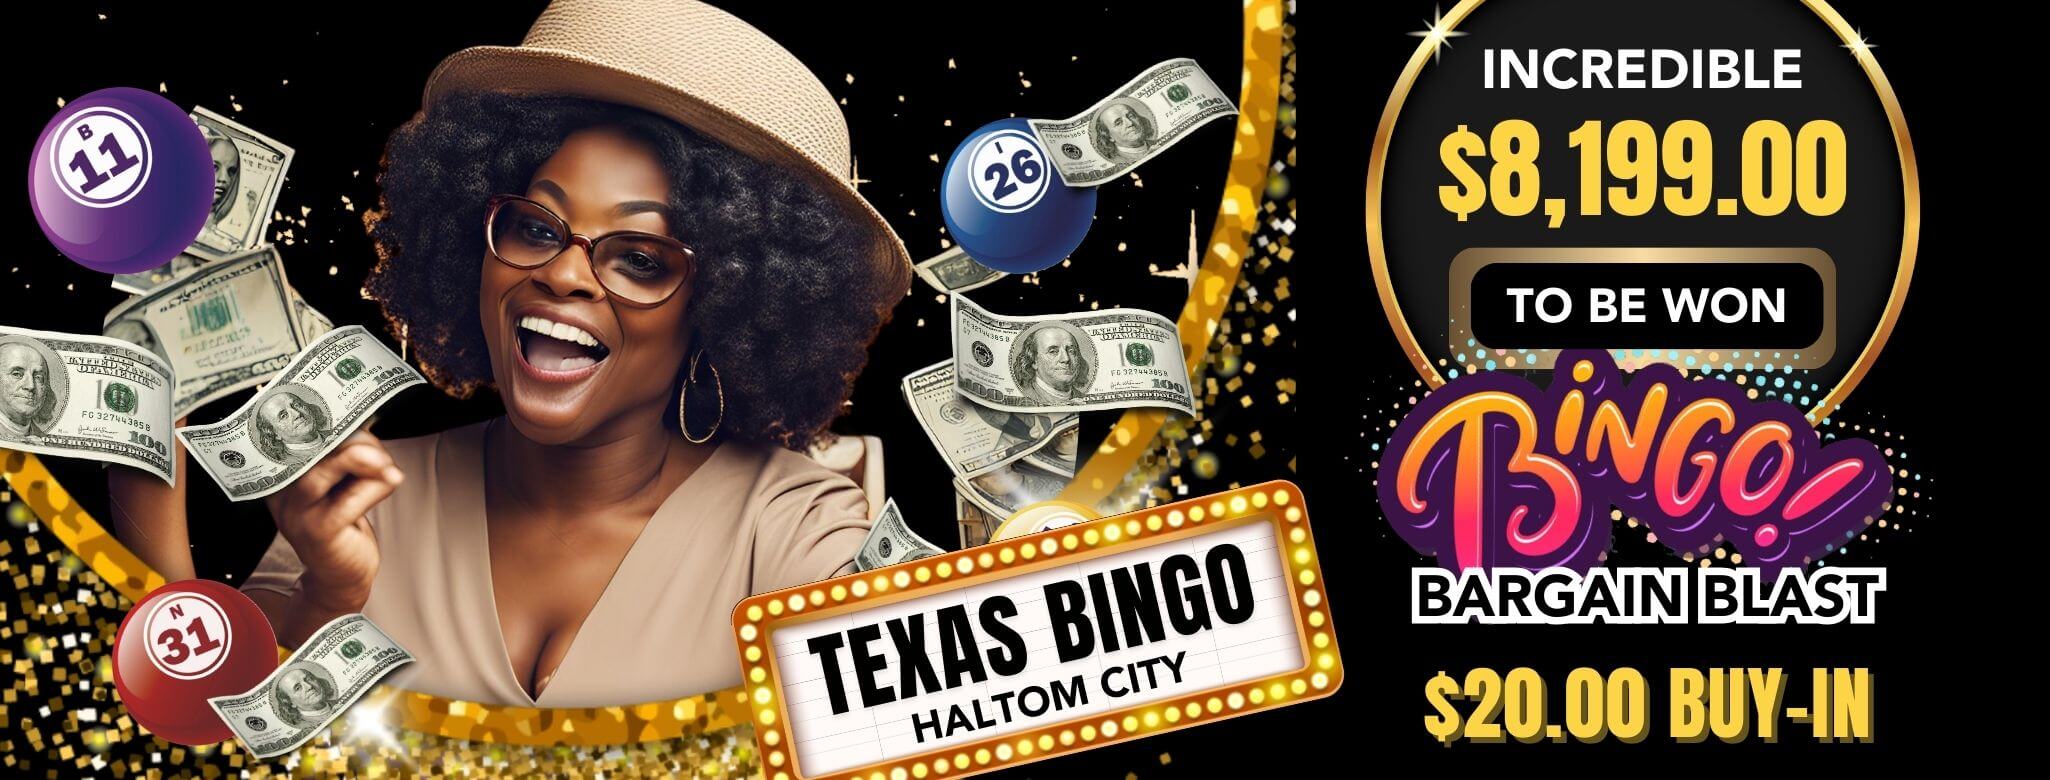 Texas Bingo Bargain Blast